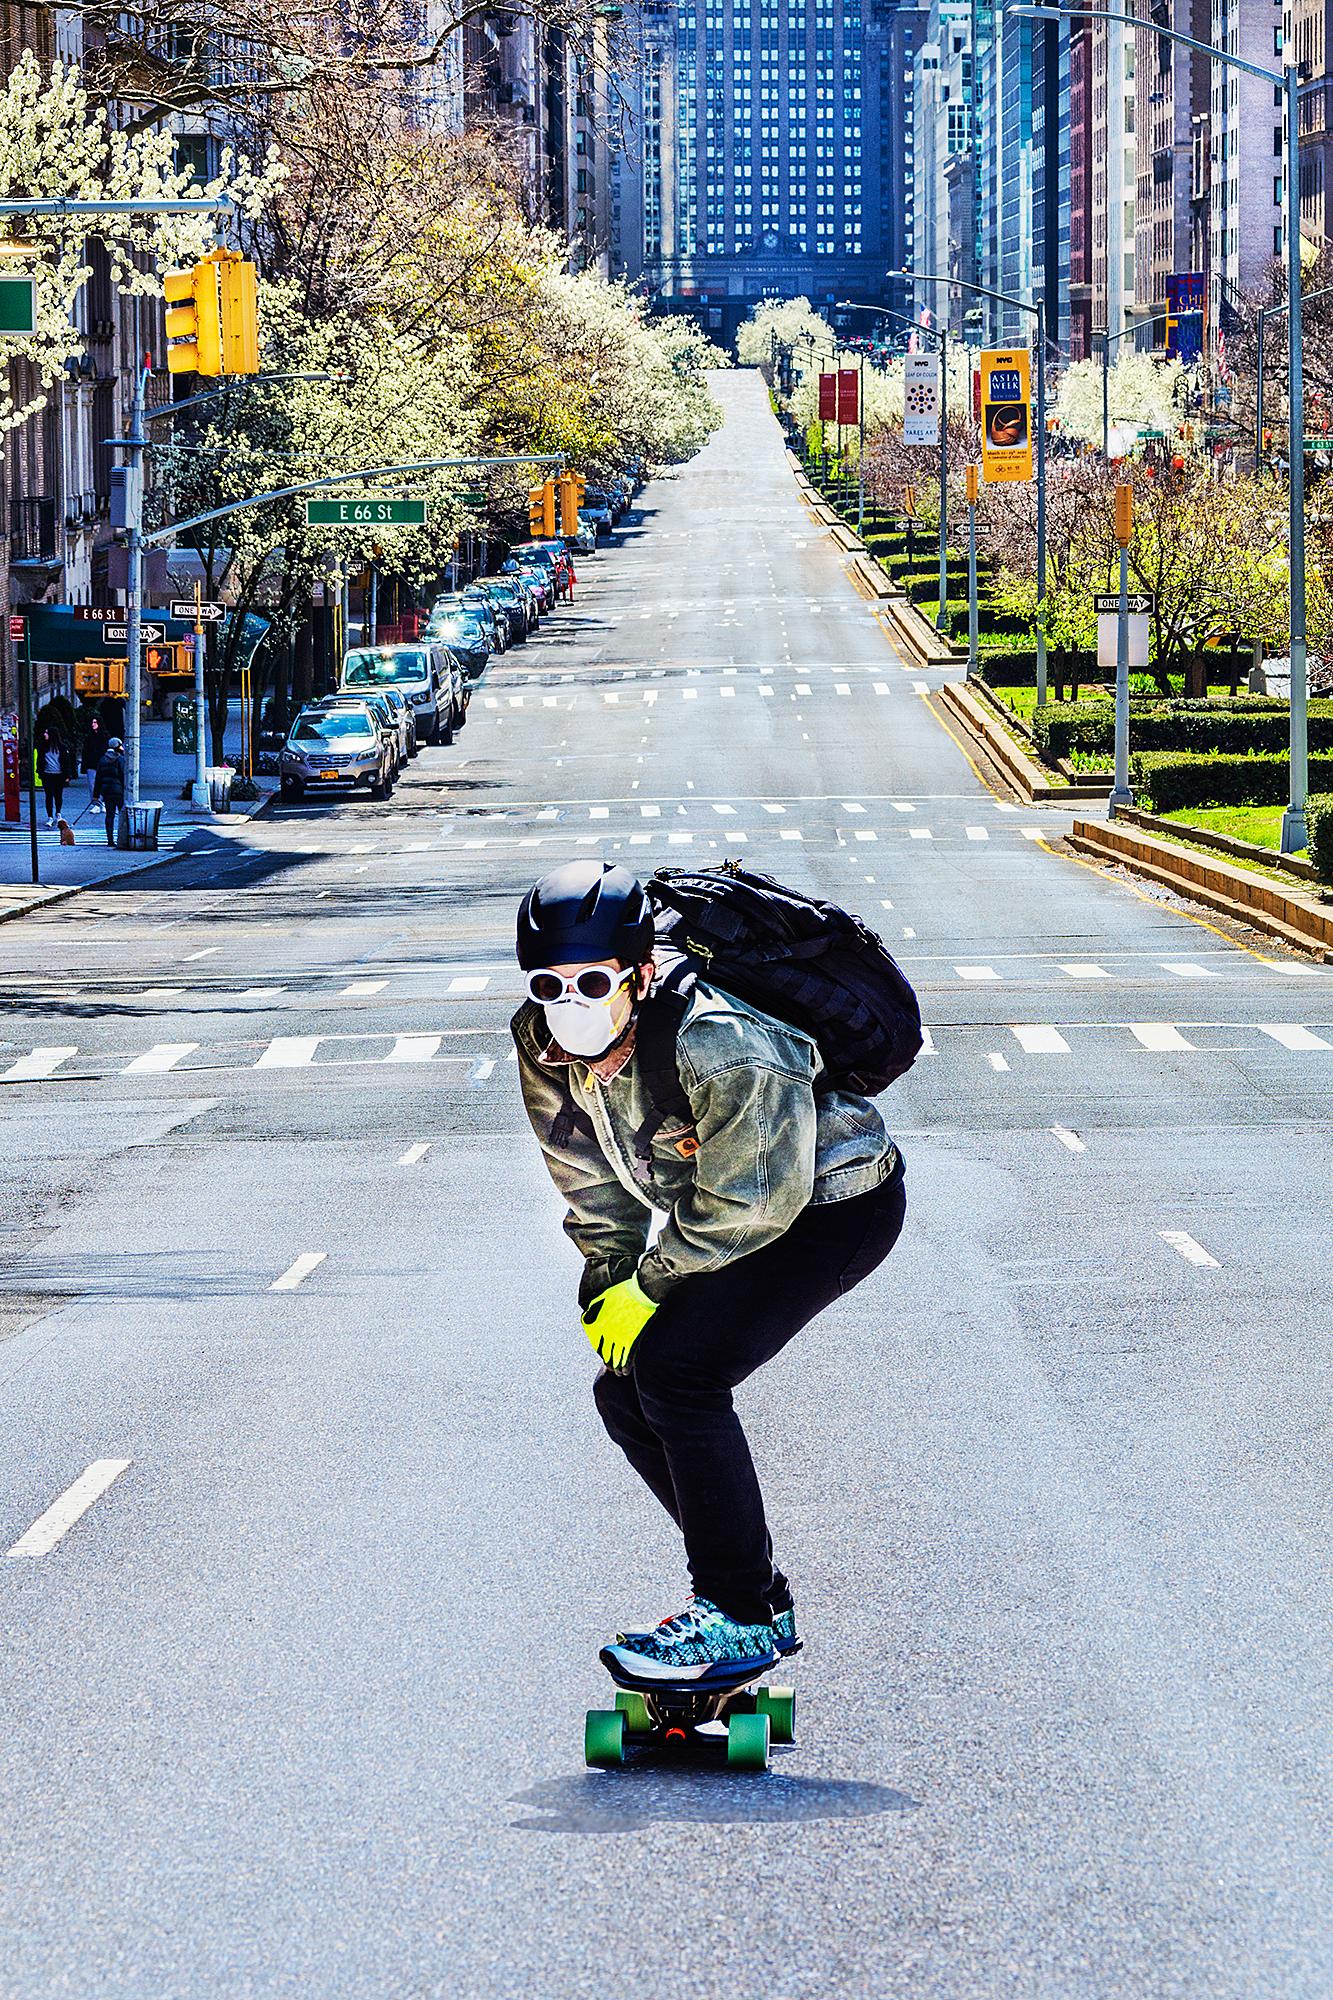 Mitchell Funk Figurative Photograph - Covid-19 New York:  Skateboarder on Empty Park Avenue